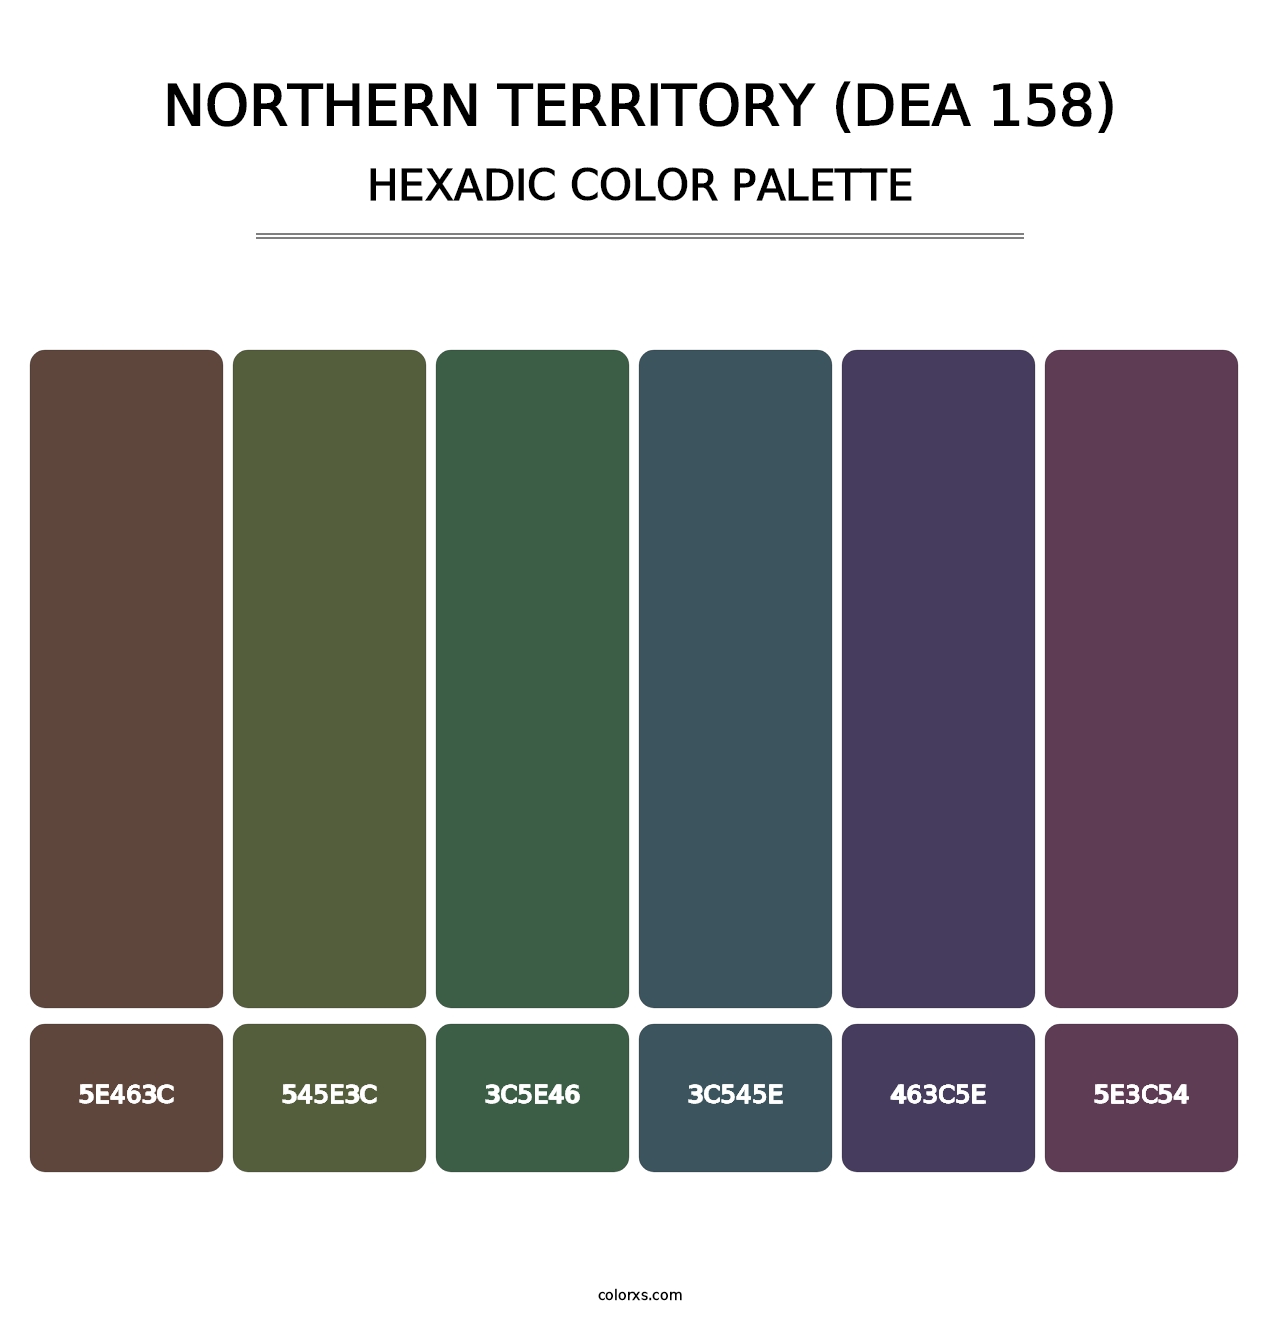 Northern Territory (DEA 158) - Hexadic Color Palette